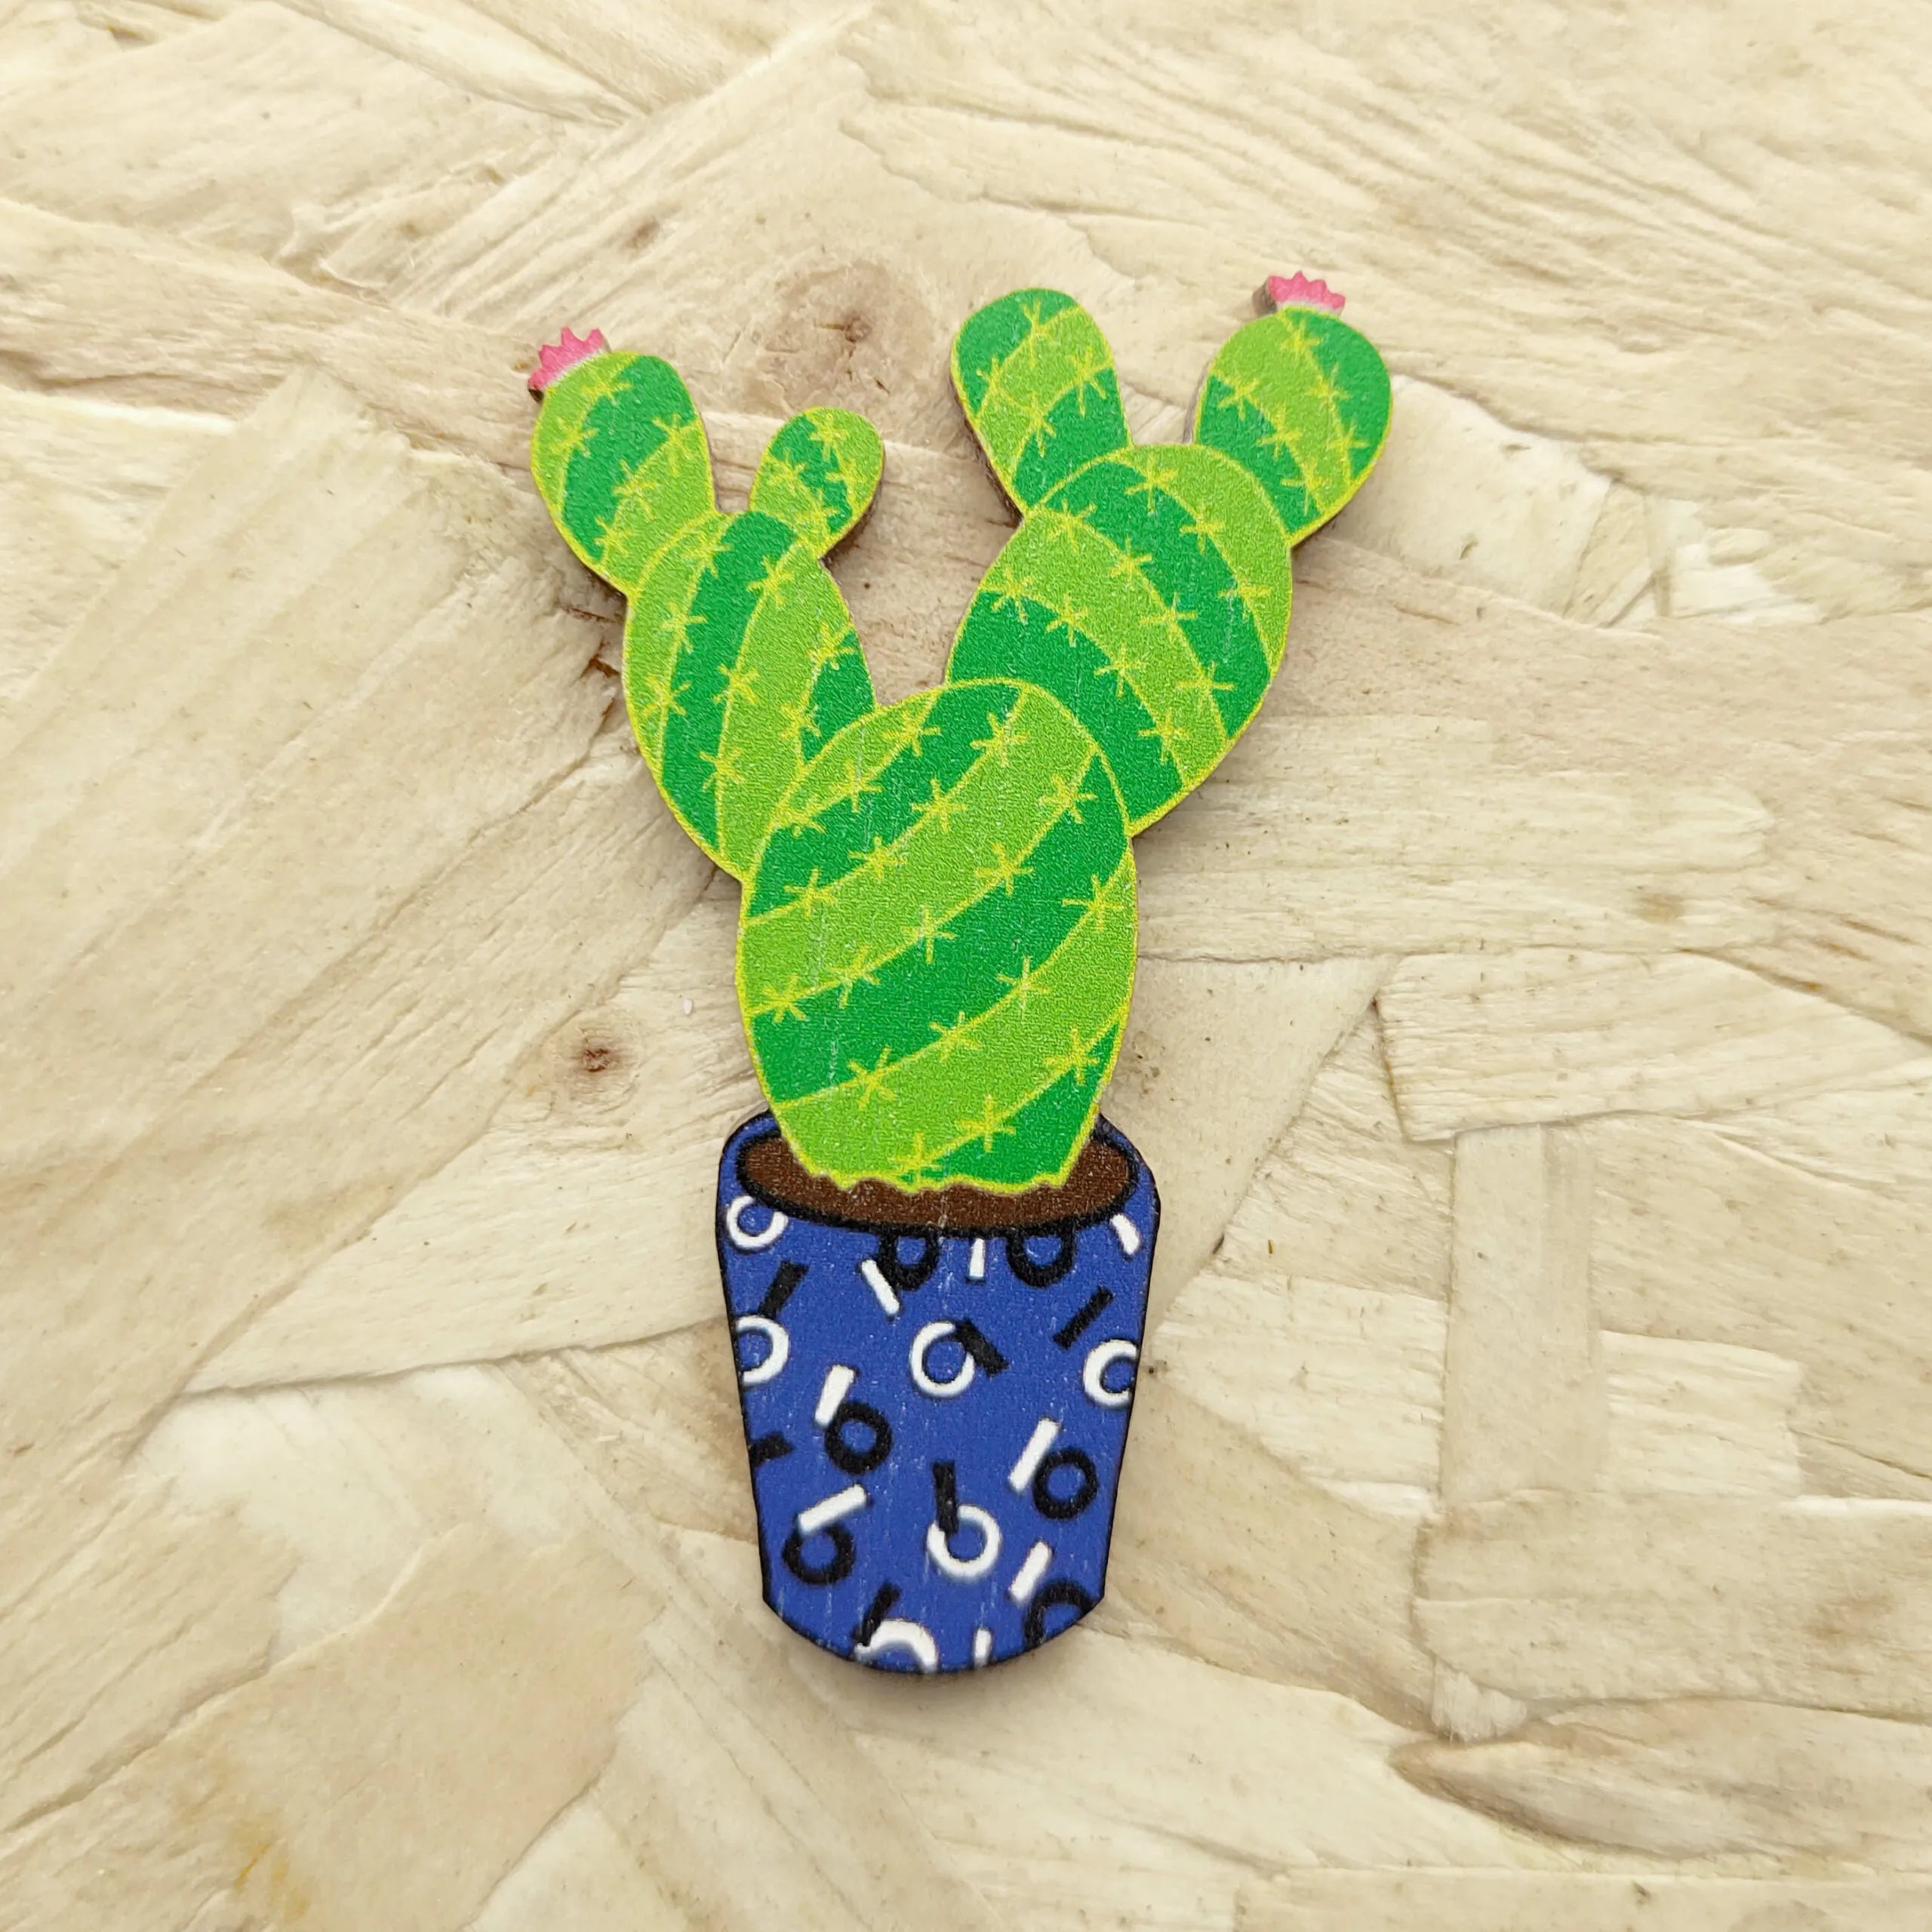 Cactus Pin - The Nancy Smillie Shop - Art, Jewellery & Designer Gifts Glasgow